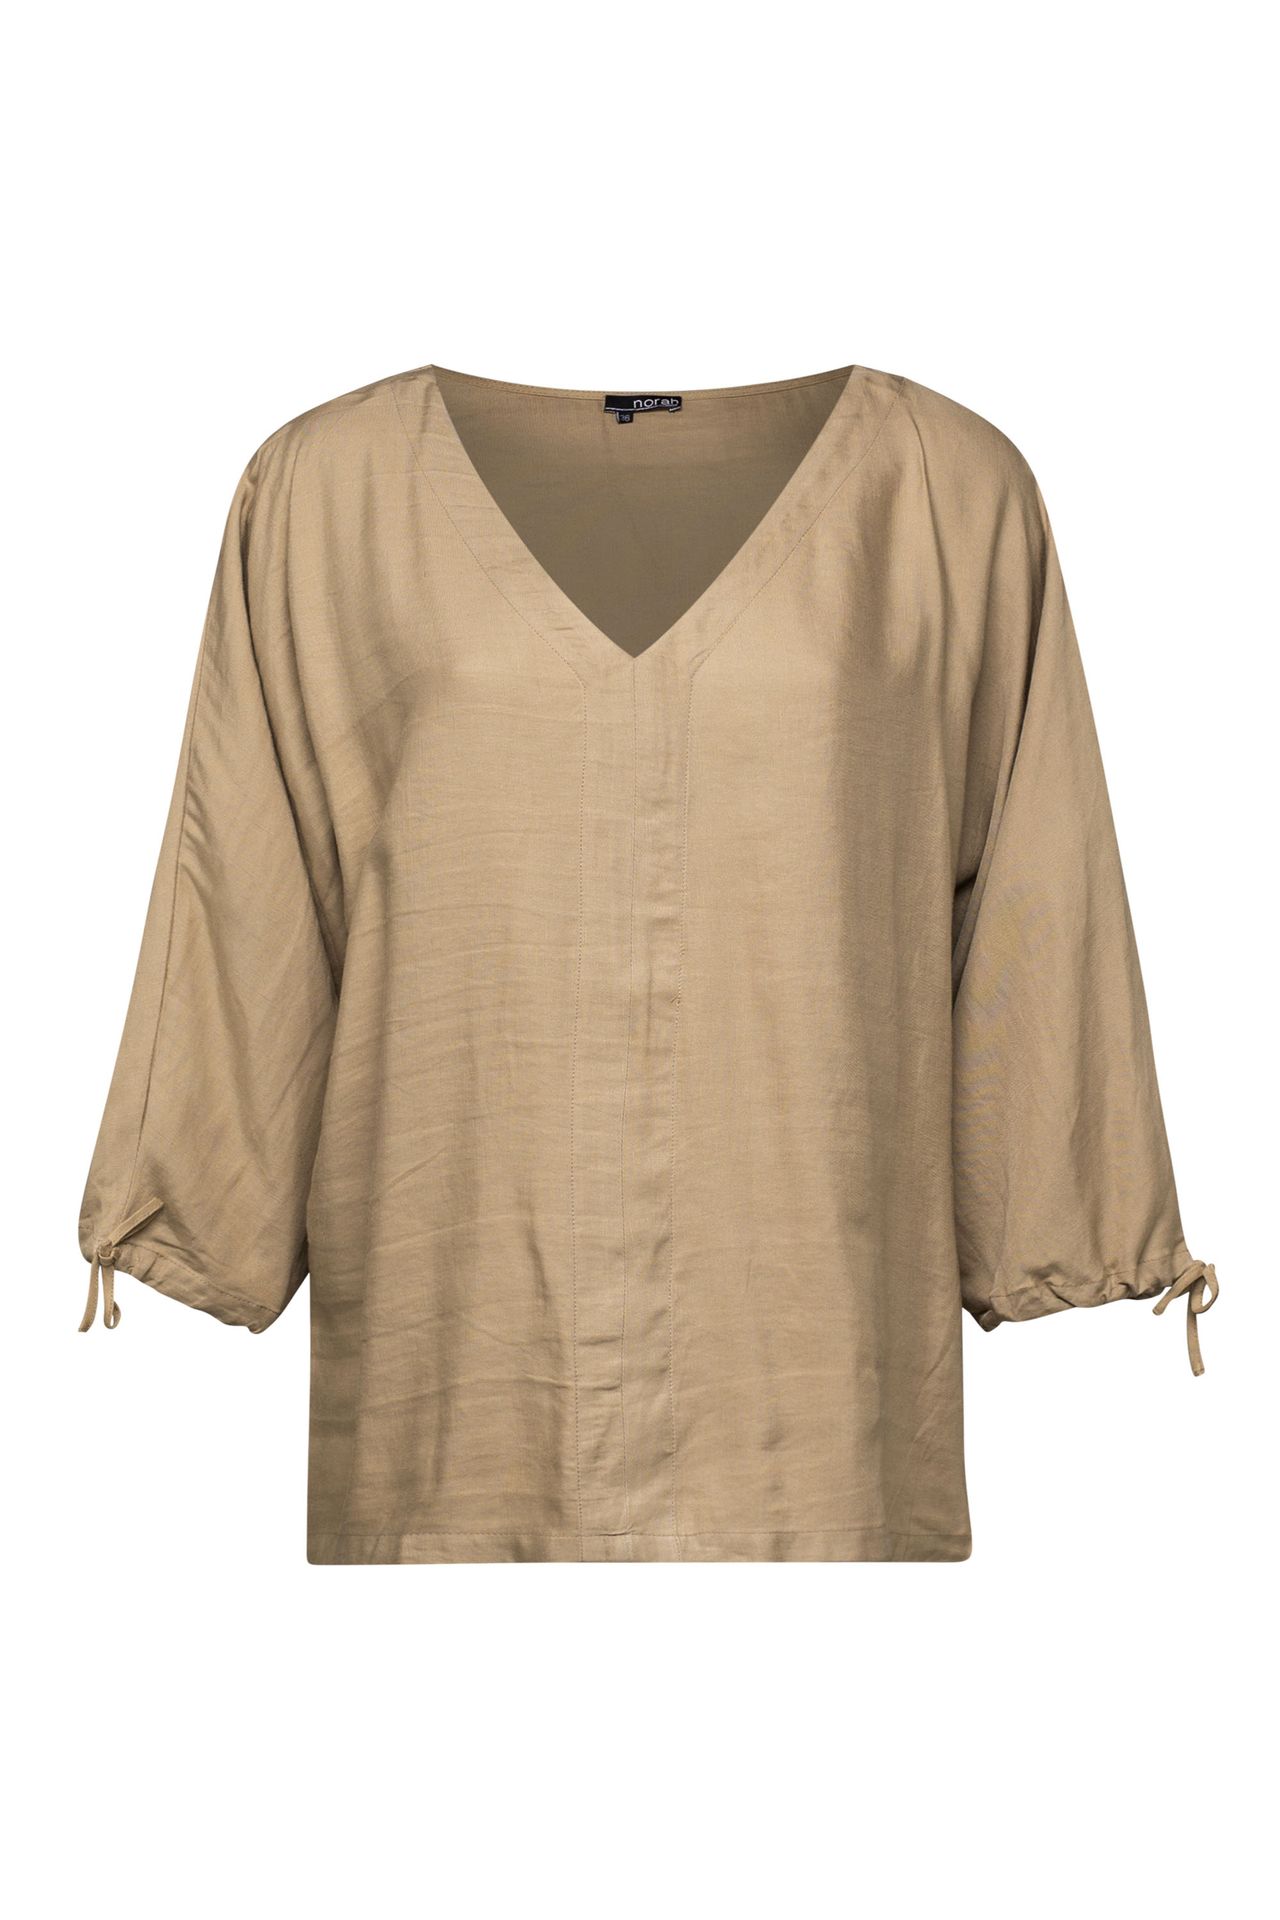 Norah Zandkleurige blouse linnen sand 212673-110